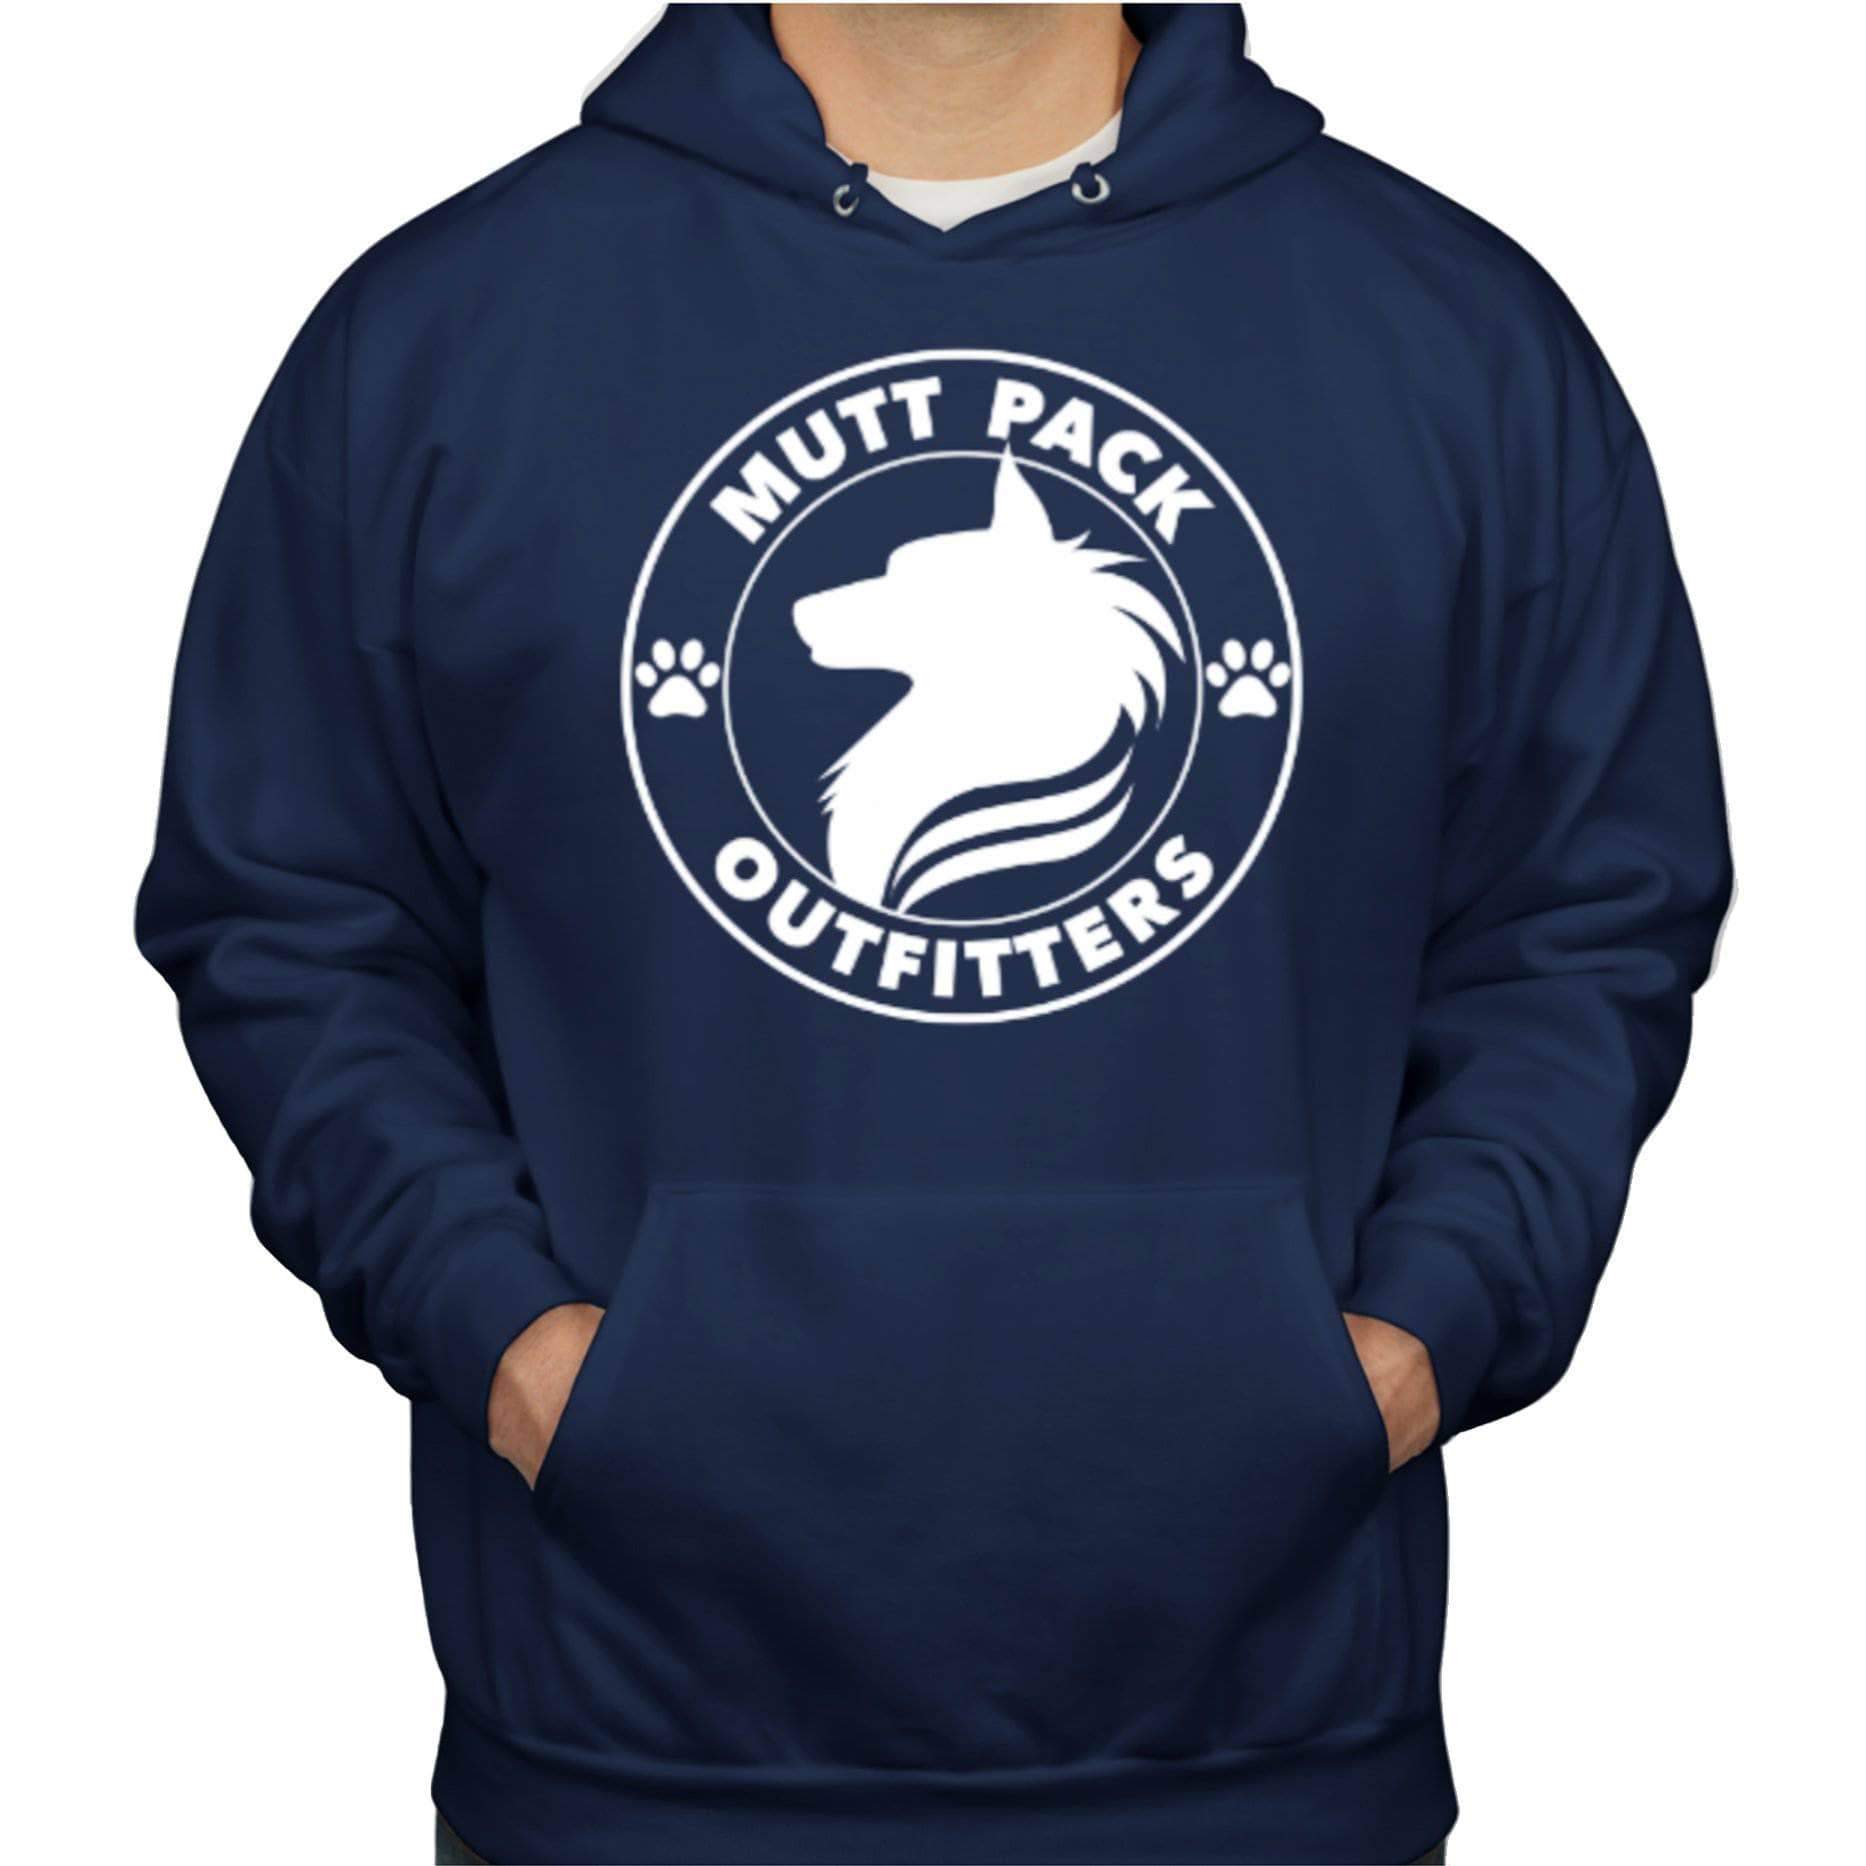 Mutt Pack Hoodie - Navy Attire - Mutt Pack Outfitters 